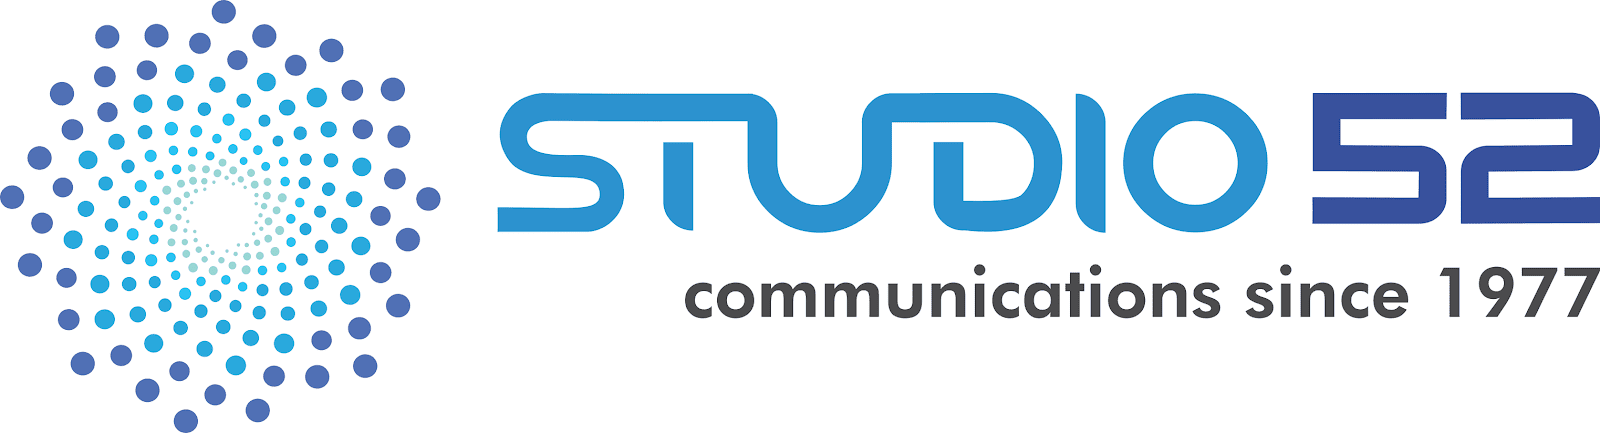 Studio 52 Media Communication